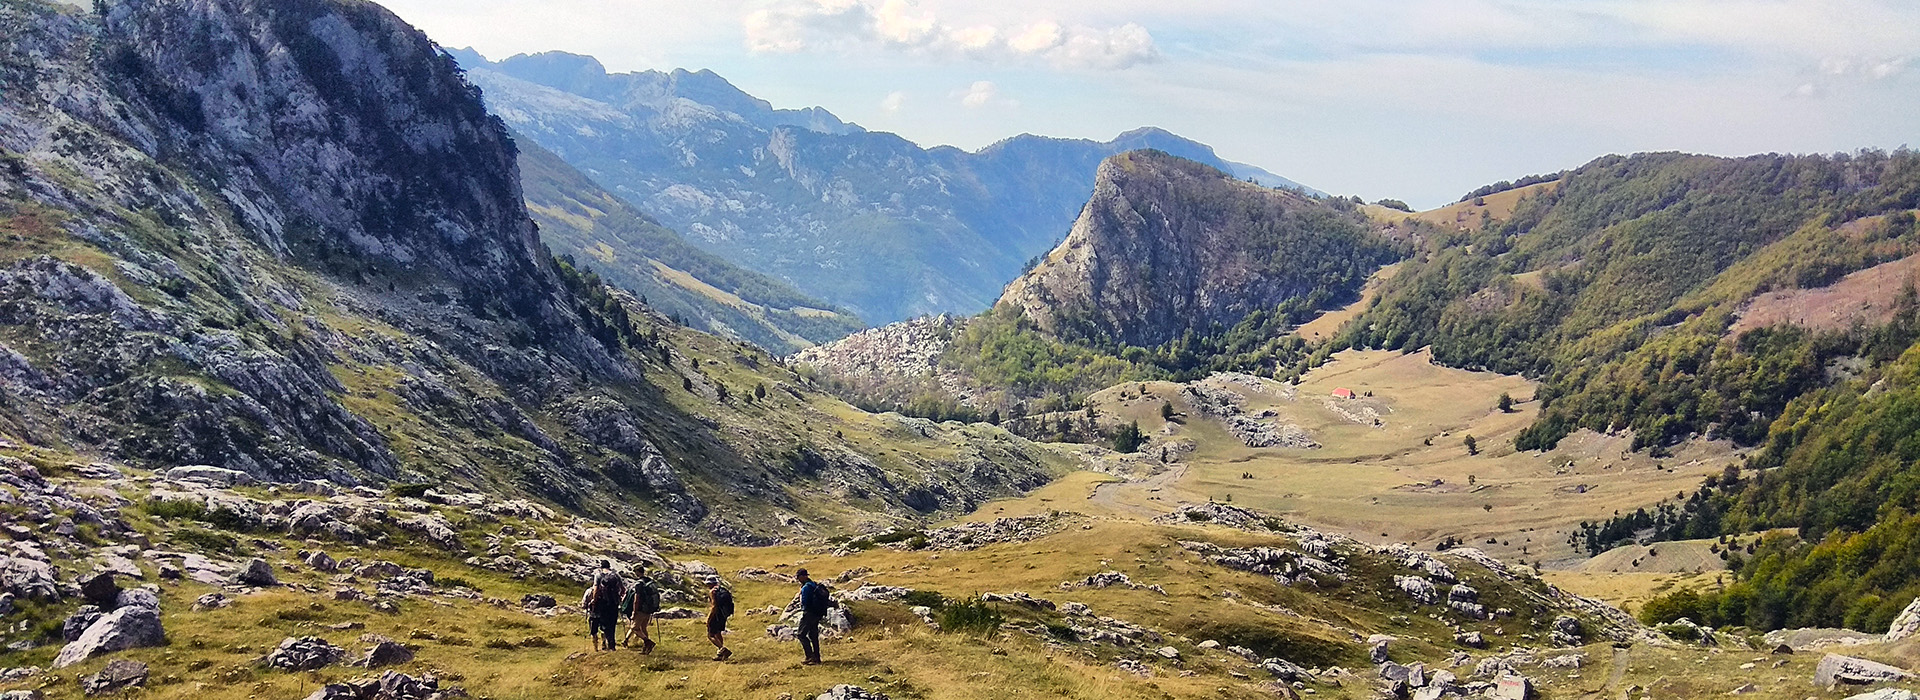 The Peaks of the Balkans walking guided holiday - Path toward Nikc